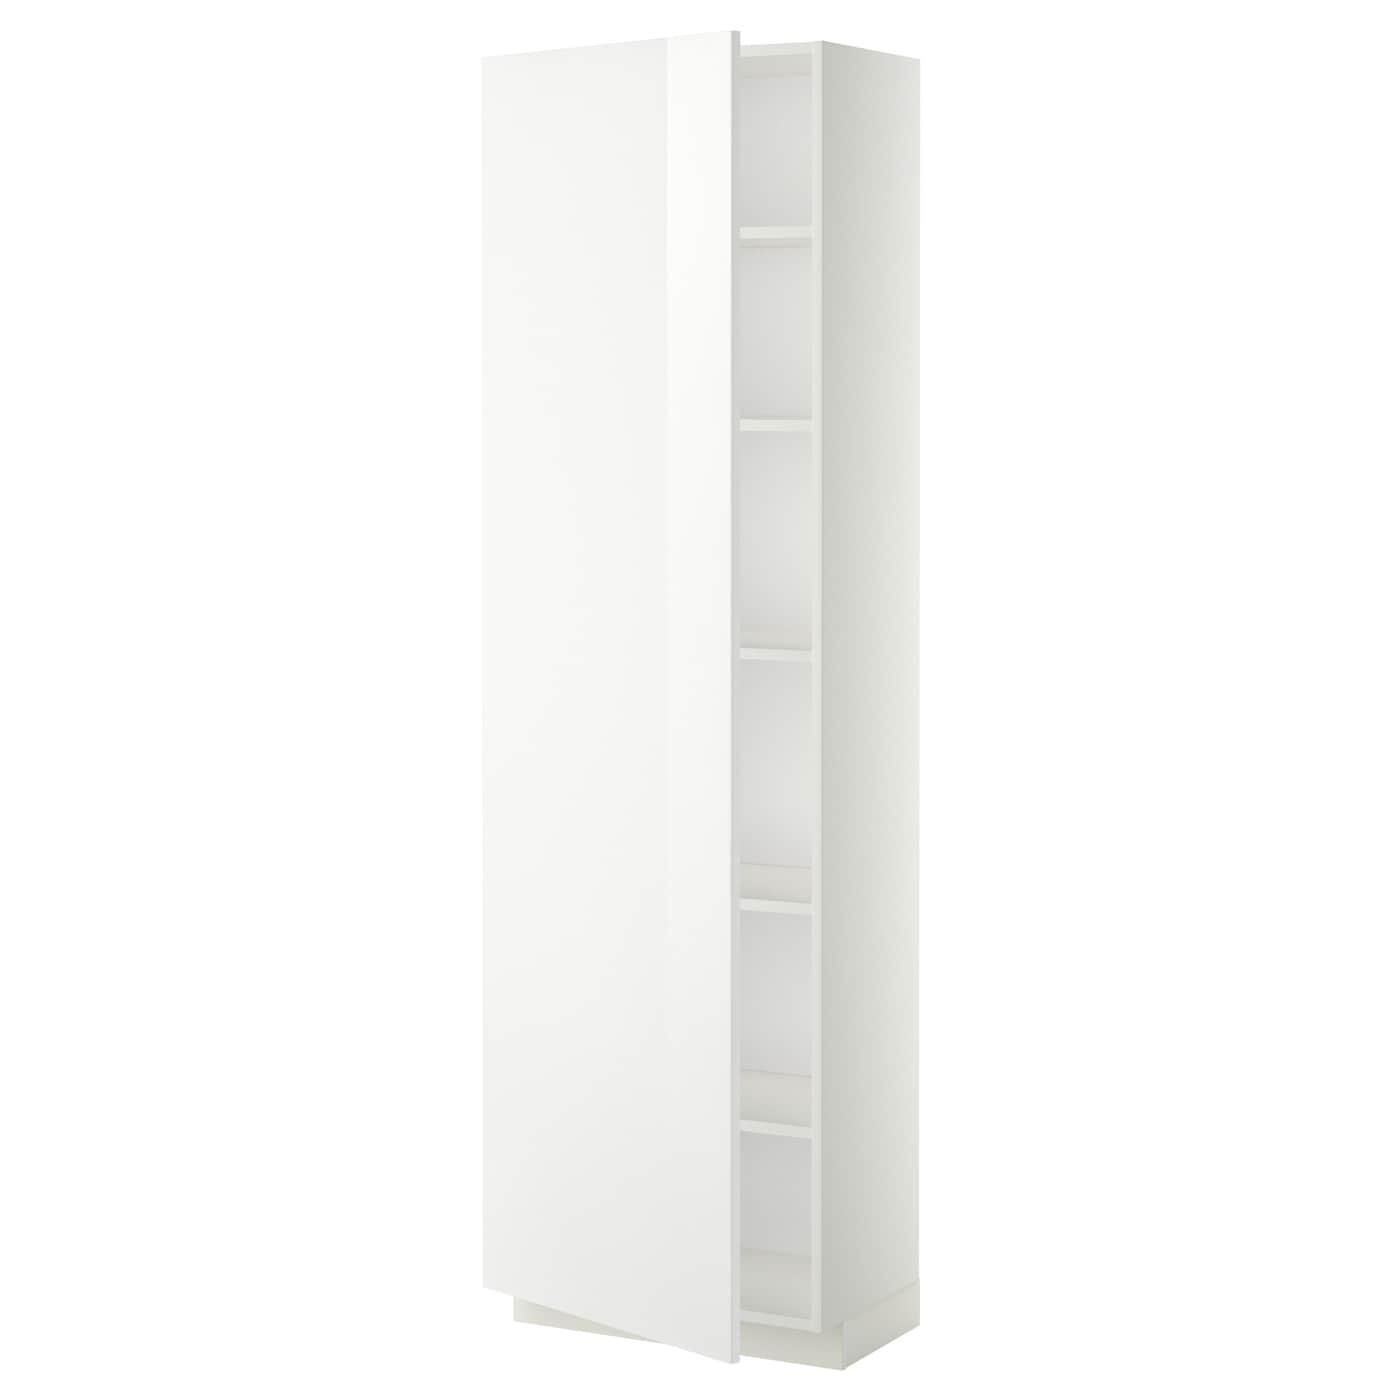 Высокий кухонный шкаф с полками - IKEA METOD/МЕТОД ИКЕА, 200х37х60 см, белый глянцевый